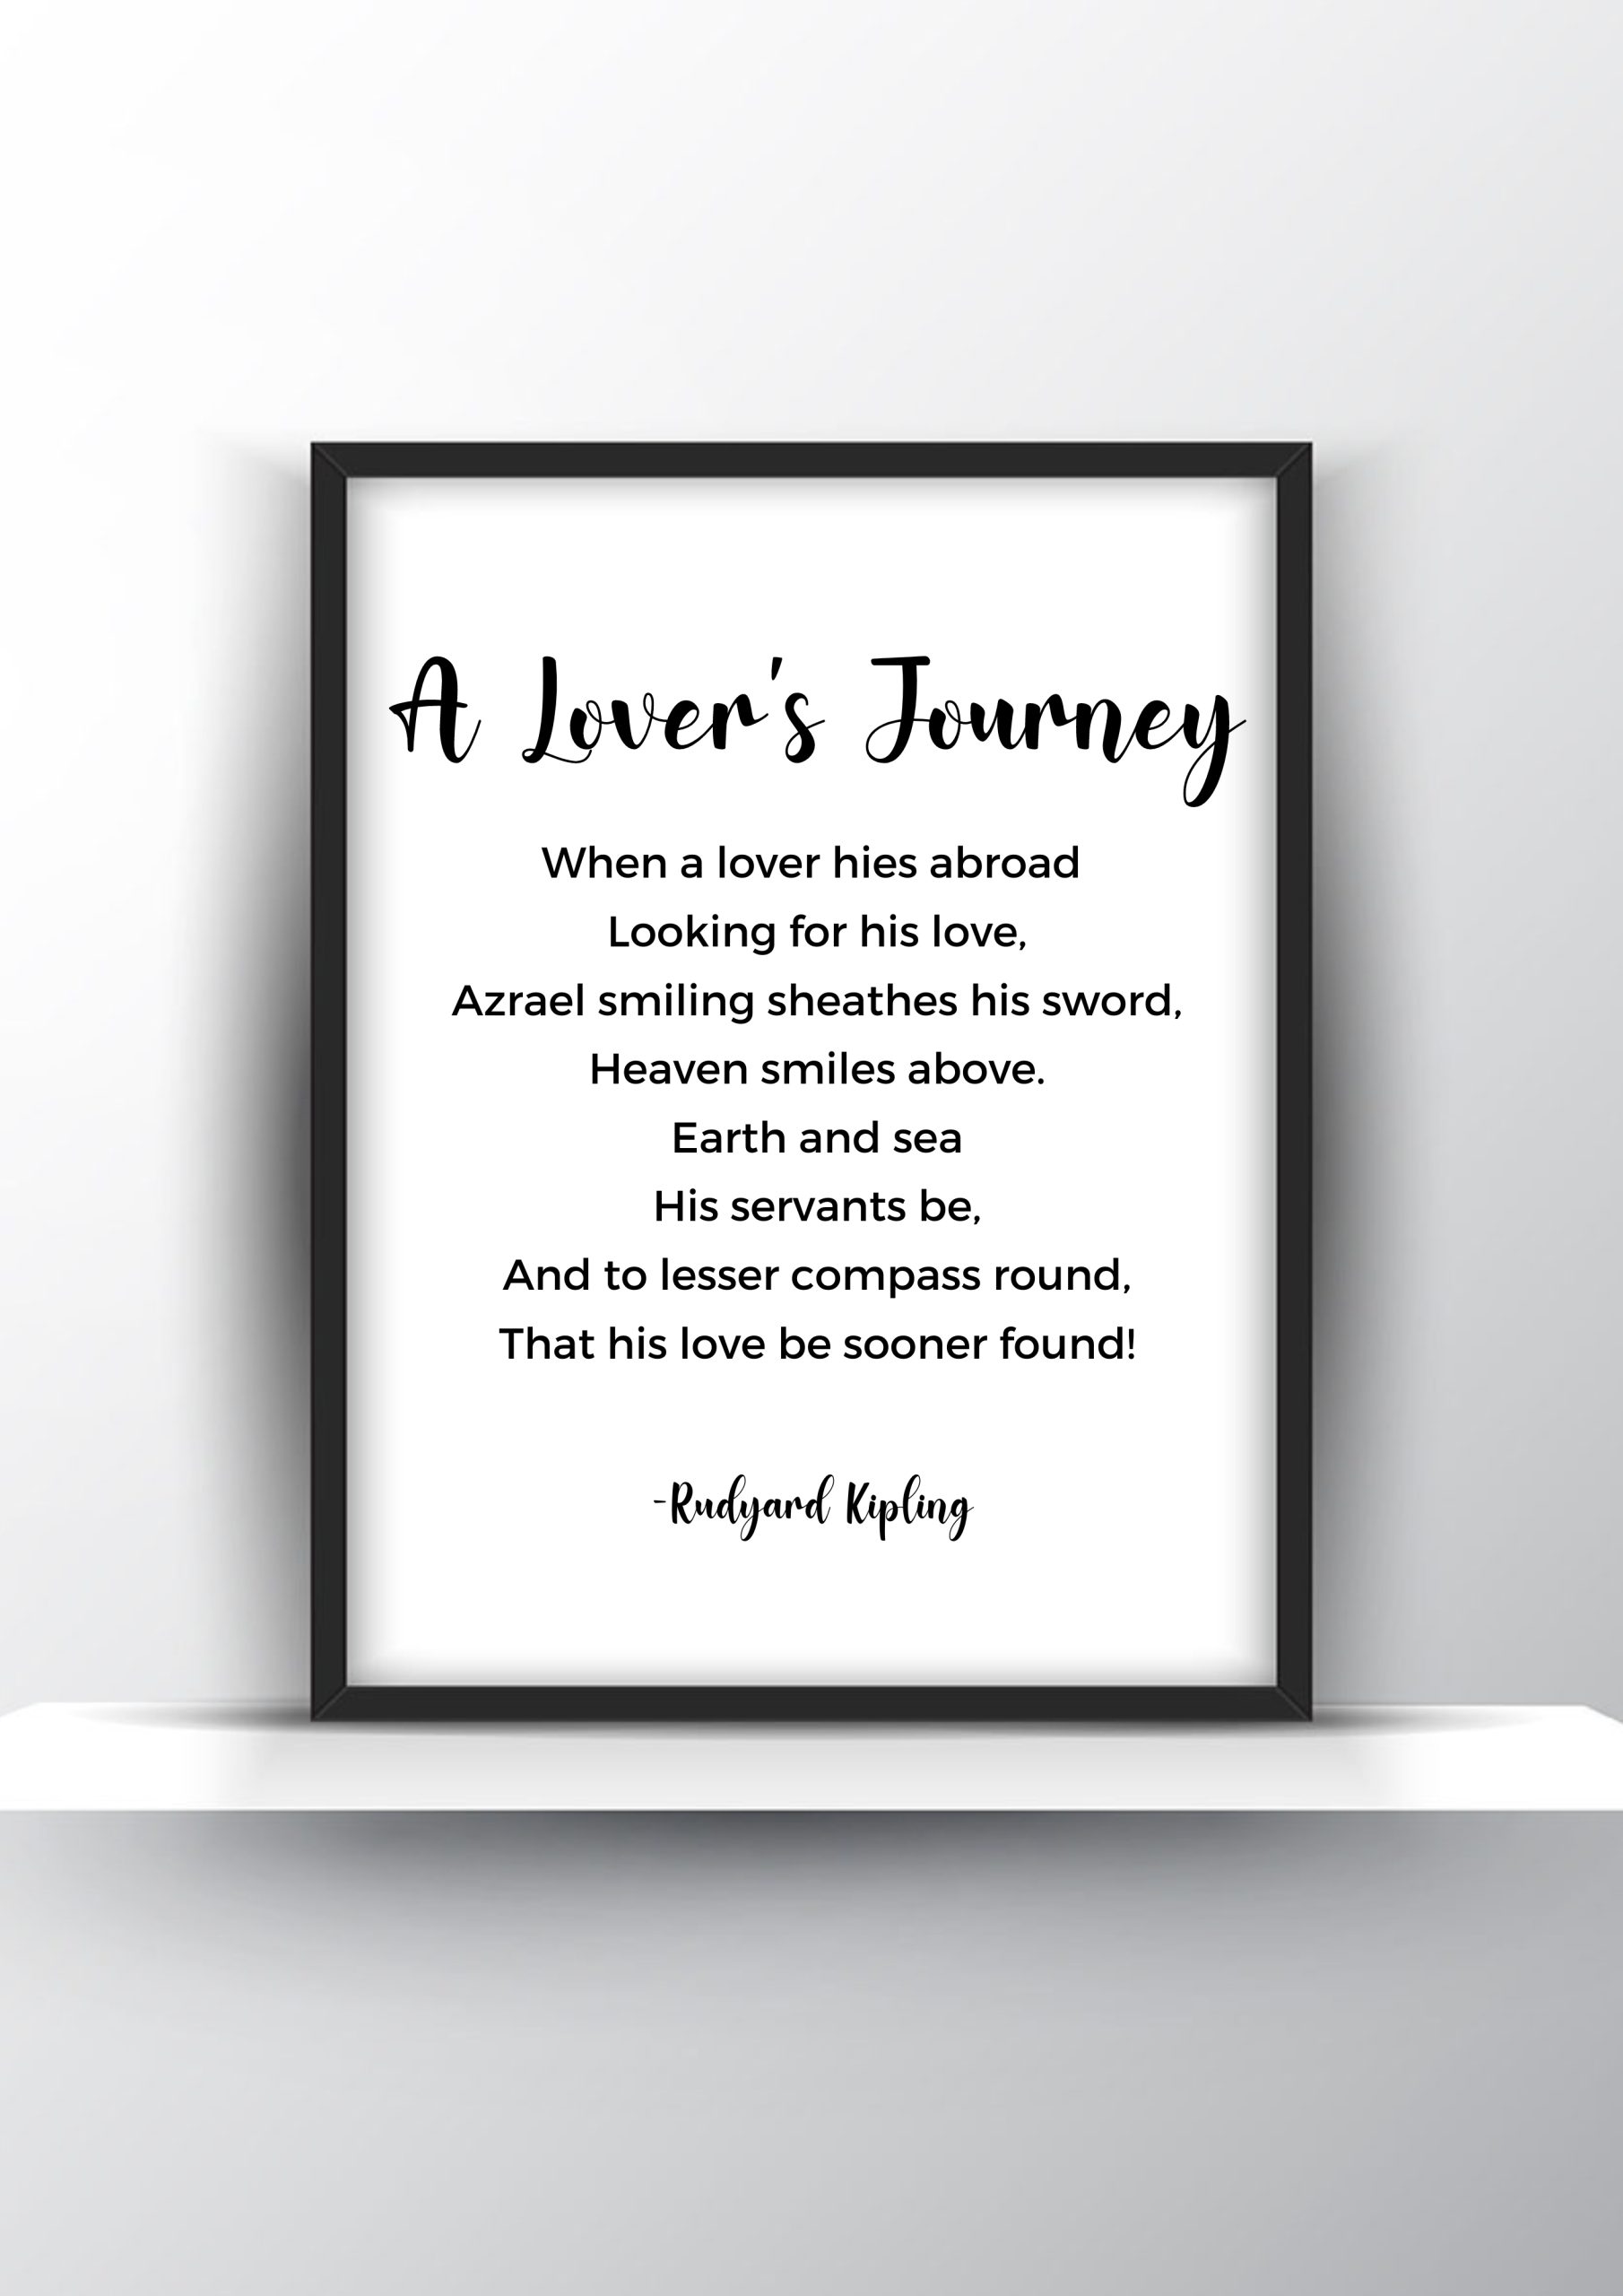 A Lover's Journey Poem by Rudyard Kipling